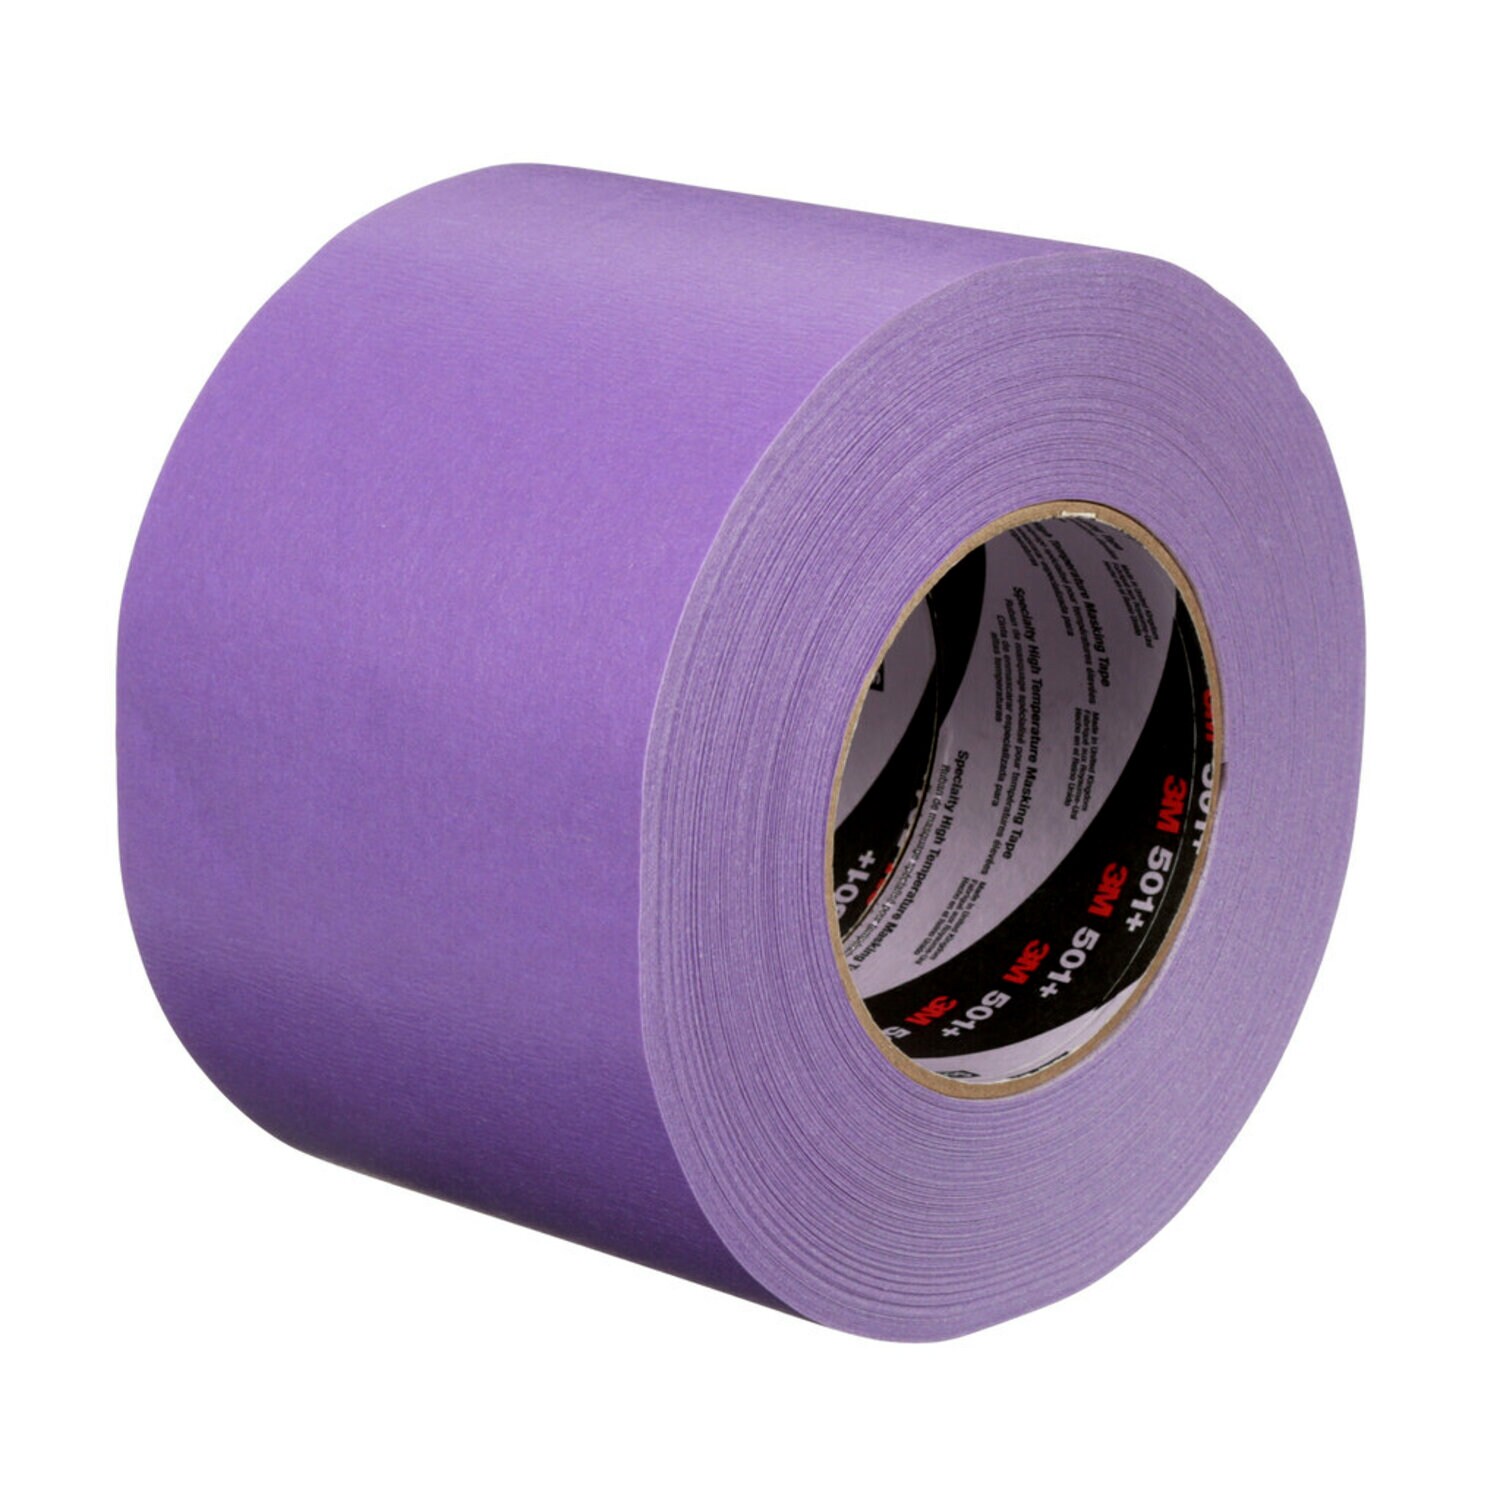 7100088493 - "3M Specialty High Temperature Masking Tape 501+, Purple, 100 mm x 55
m,
 8 Rolls/Case"